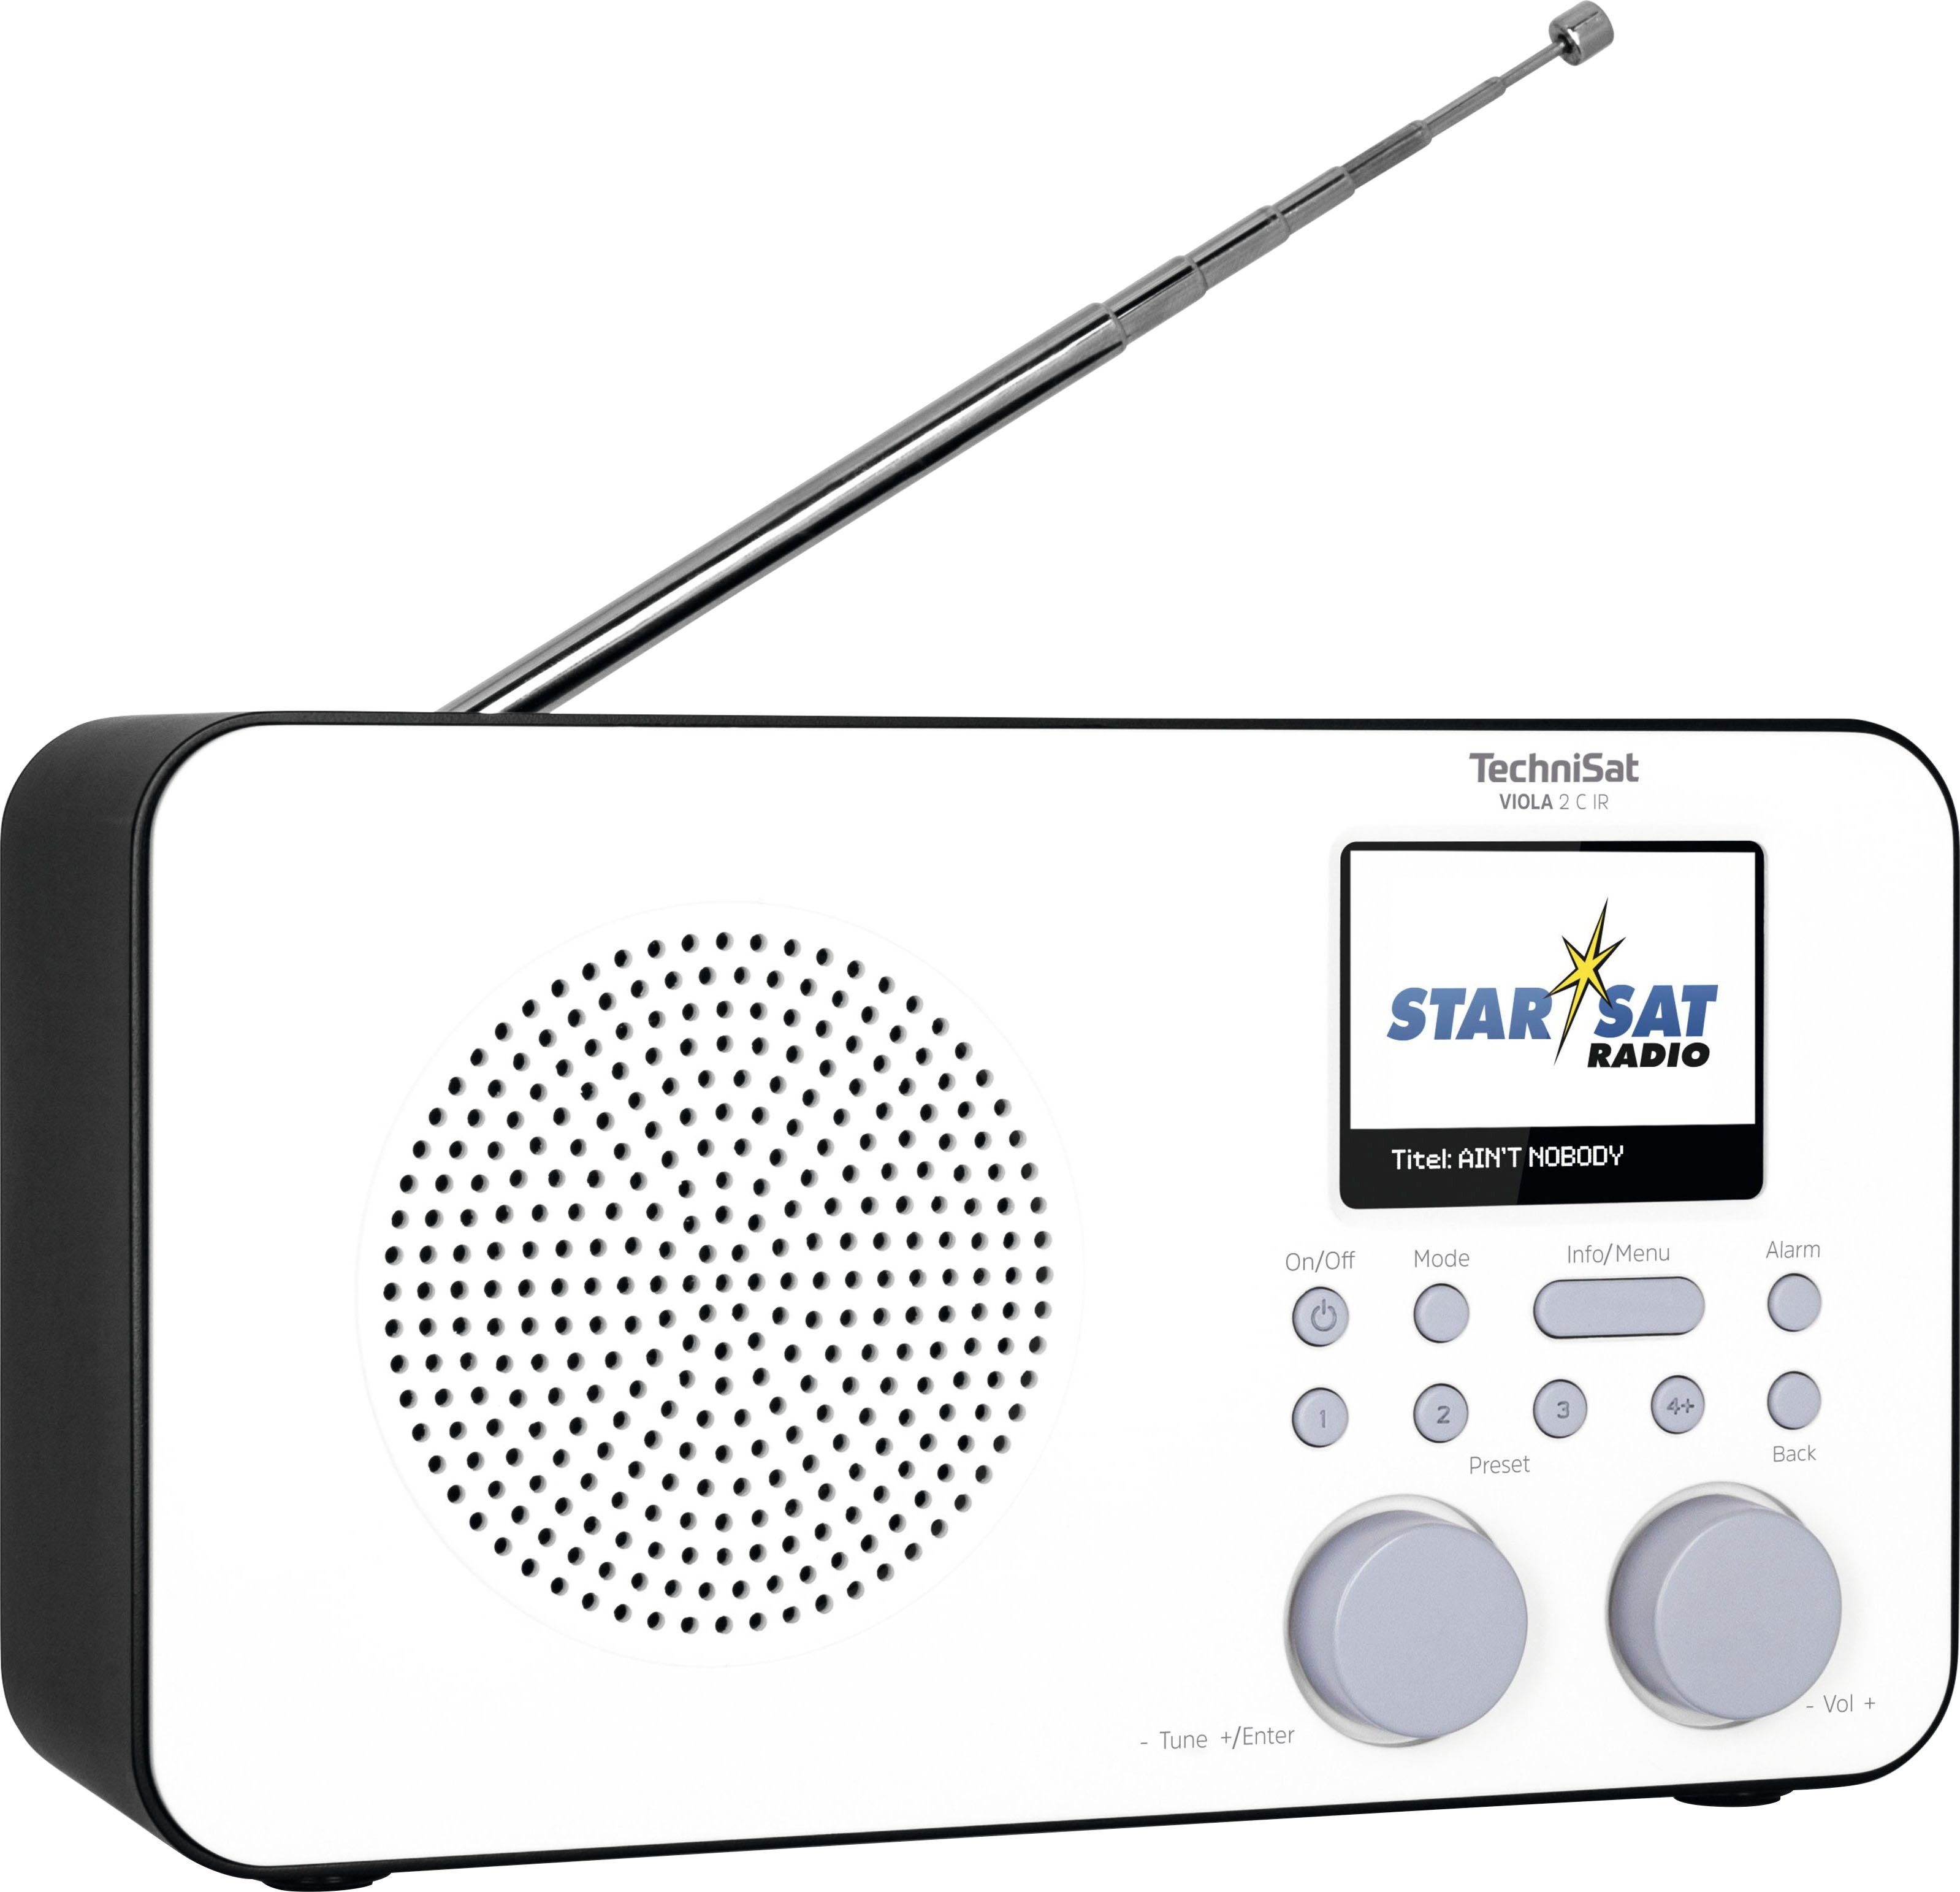 TechniSat VIOLA 2 C IR mit mit Internet-Radio (Digitalradio DAB+, Internetradio, Farbdisplay, RDS, Akku) UKW (DAB), Tragbares